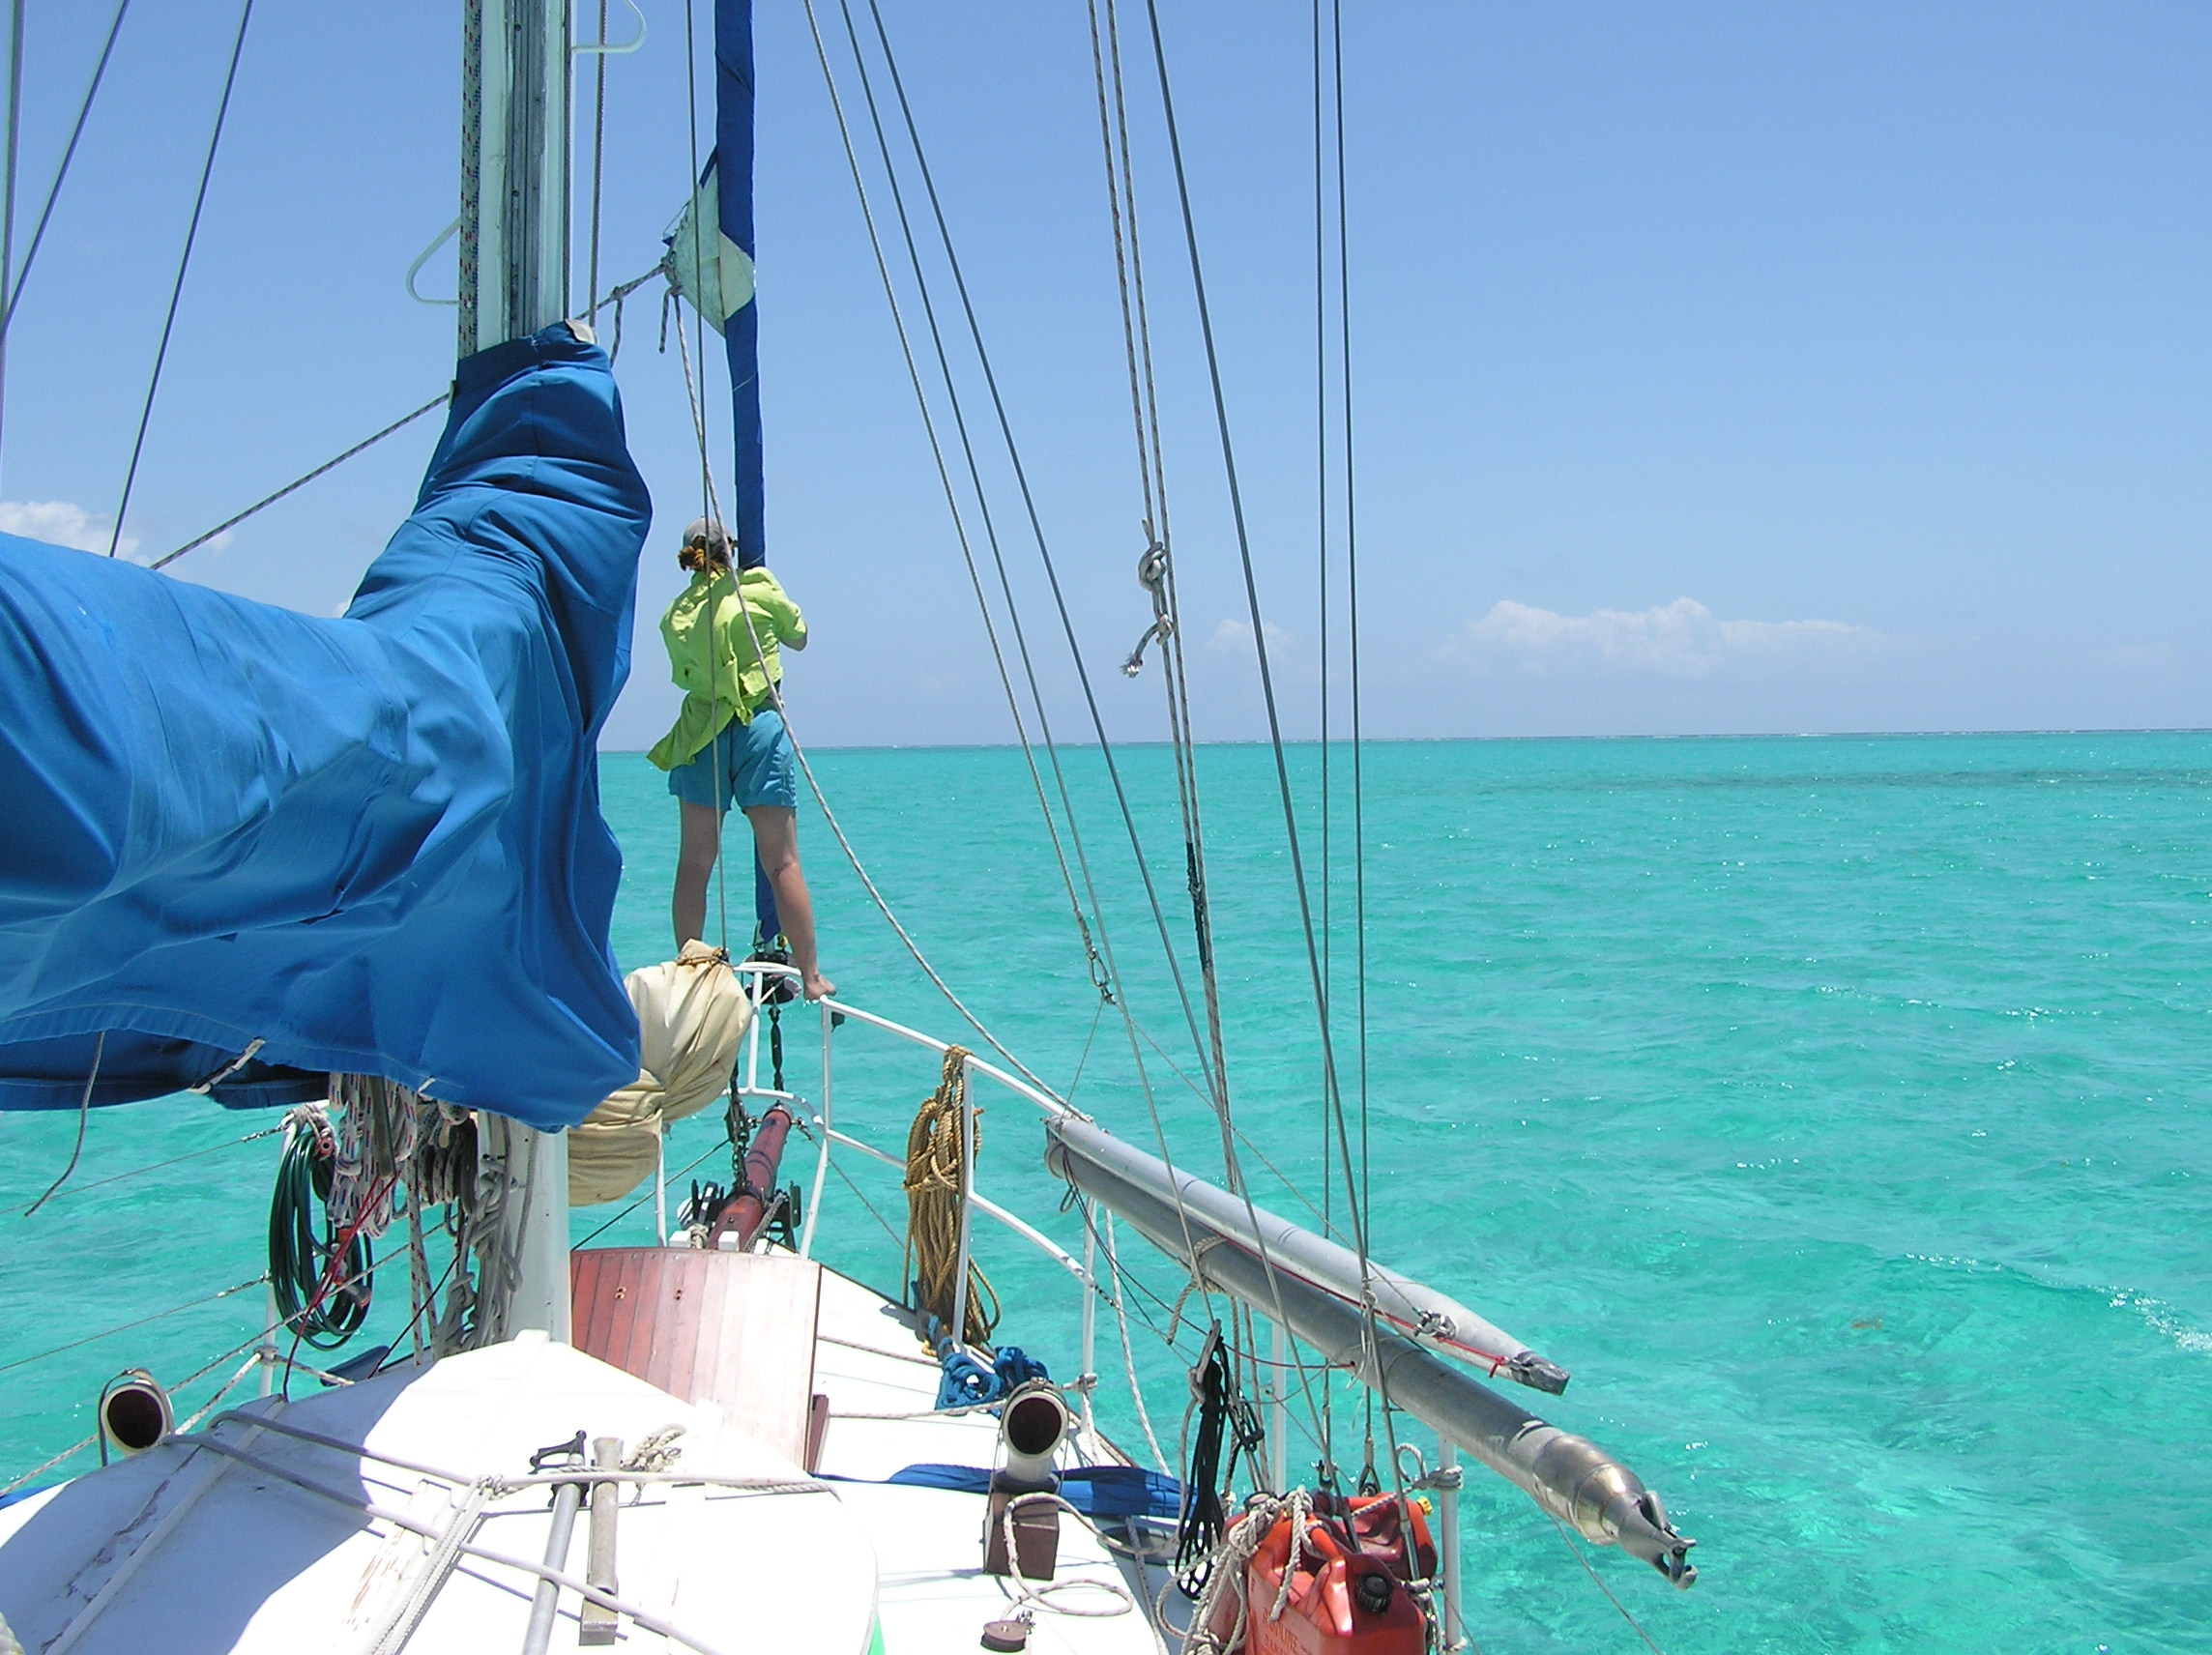 Global sailor launches navigation courses in Merimbula